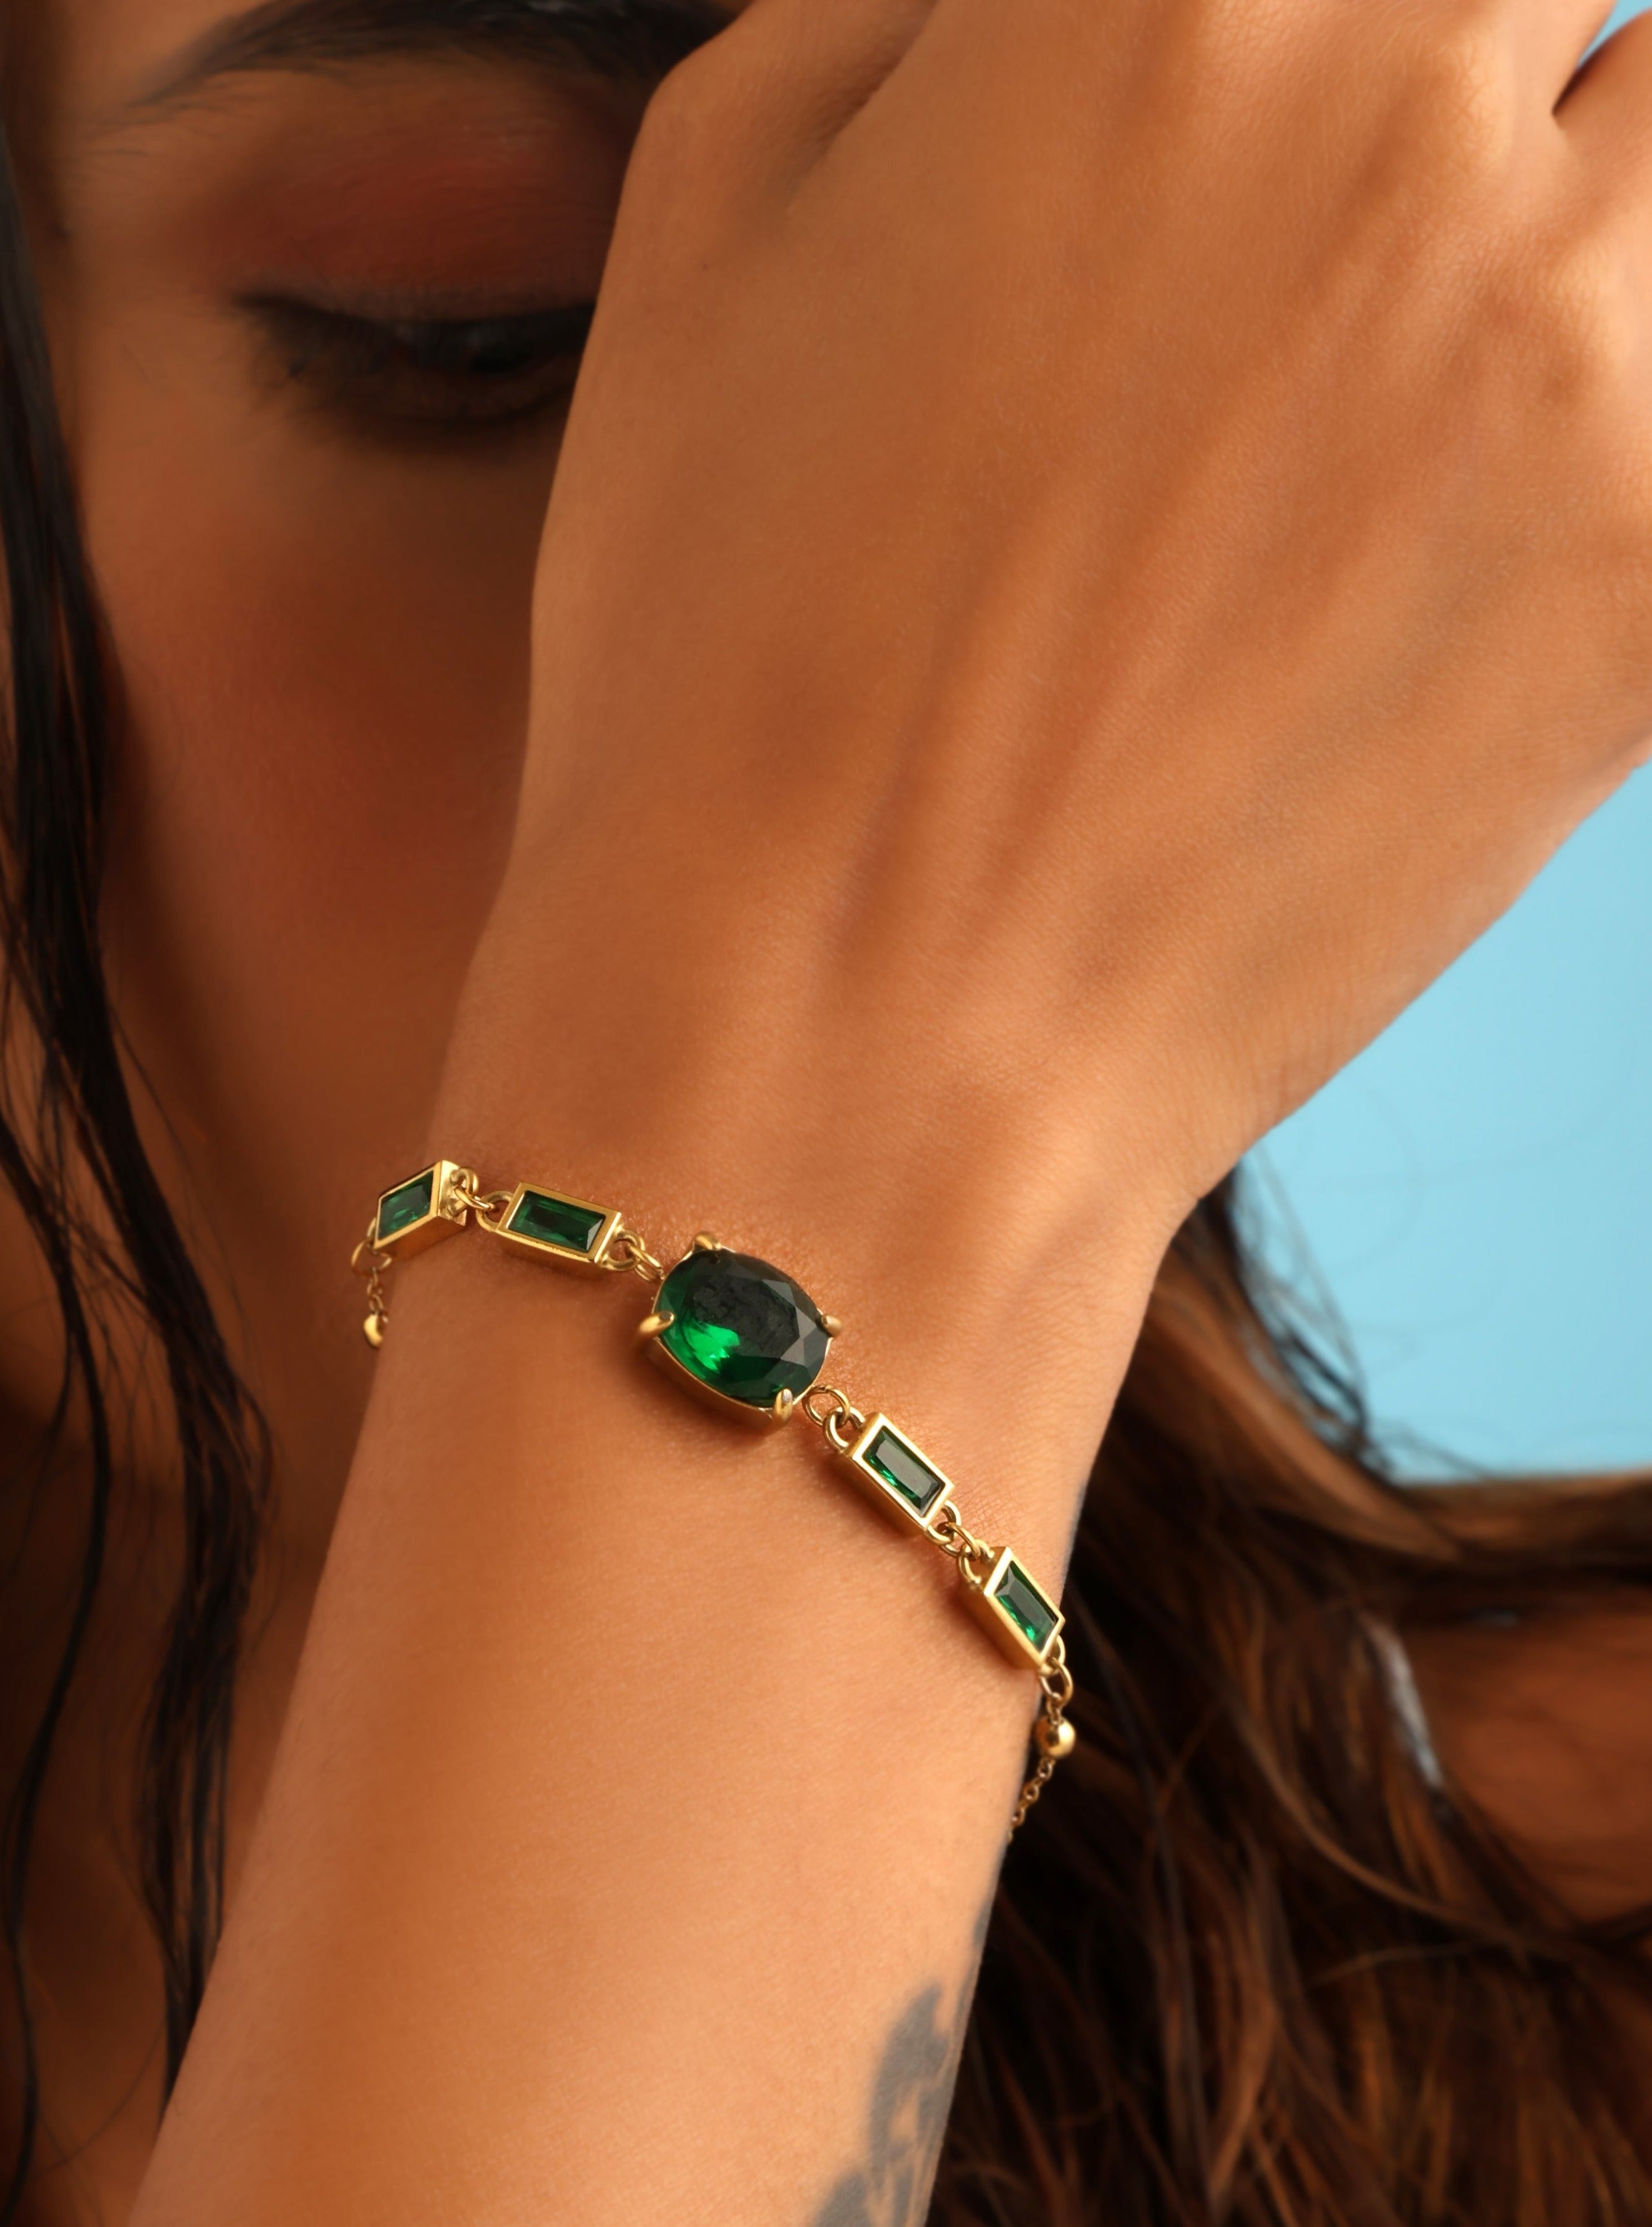 Bermuda Emerald Bracelet